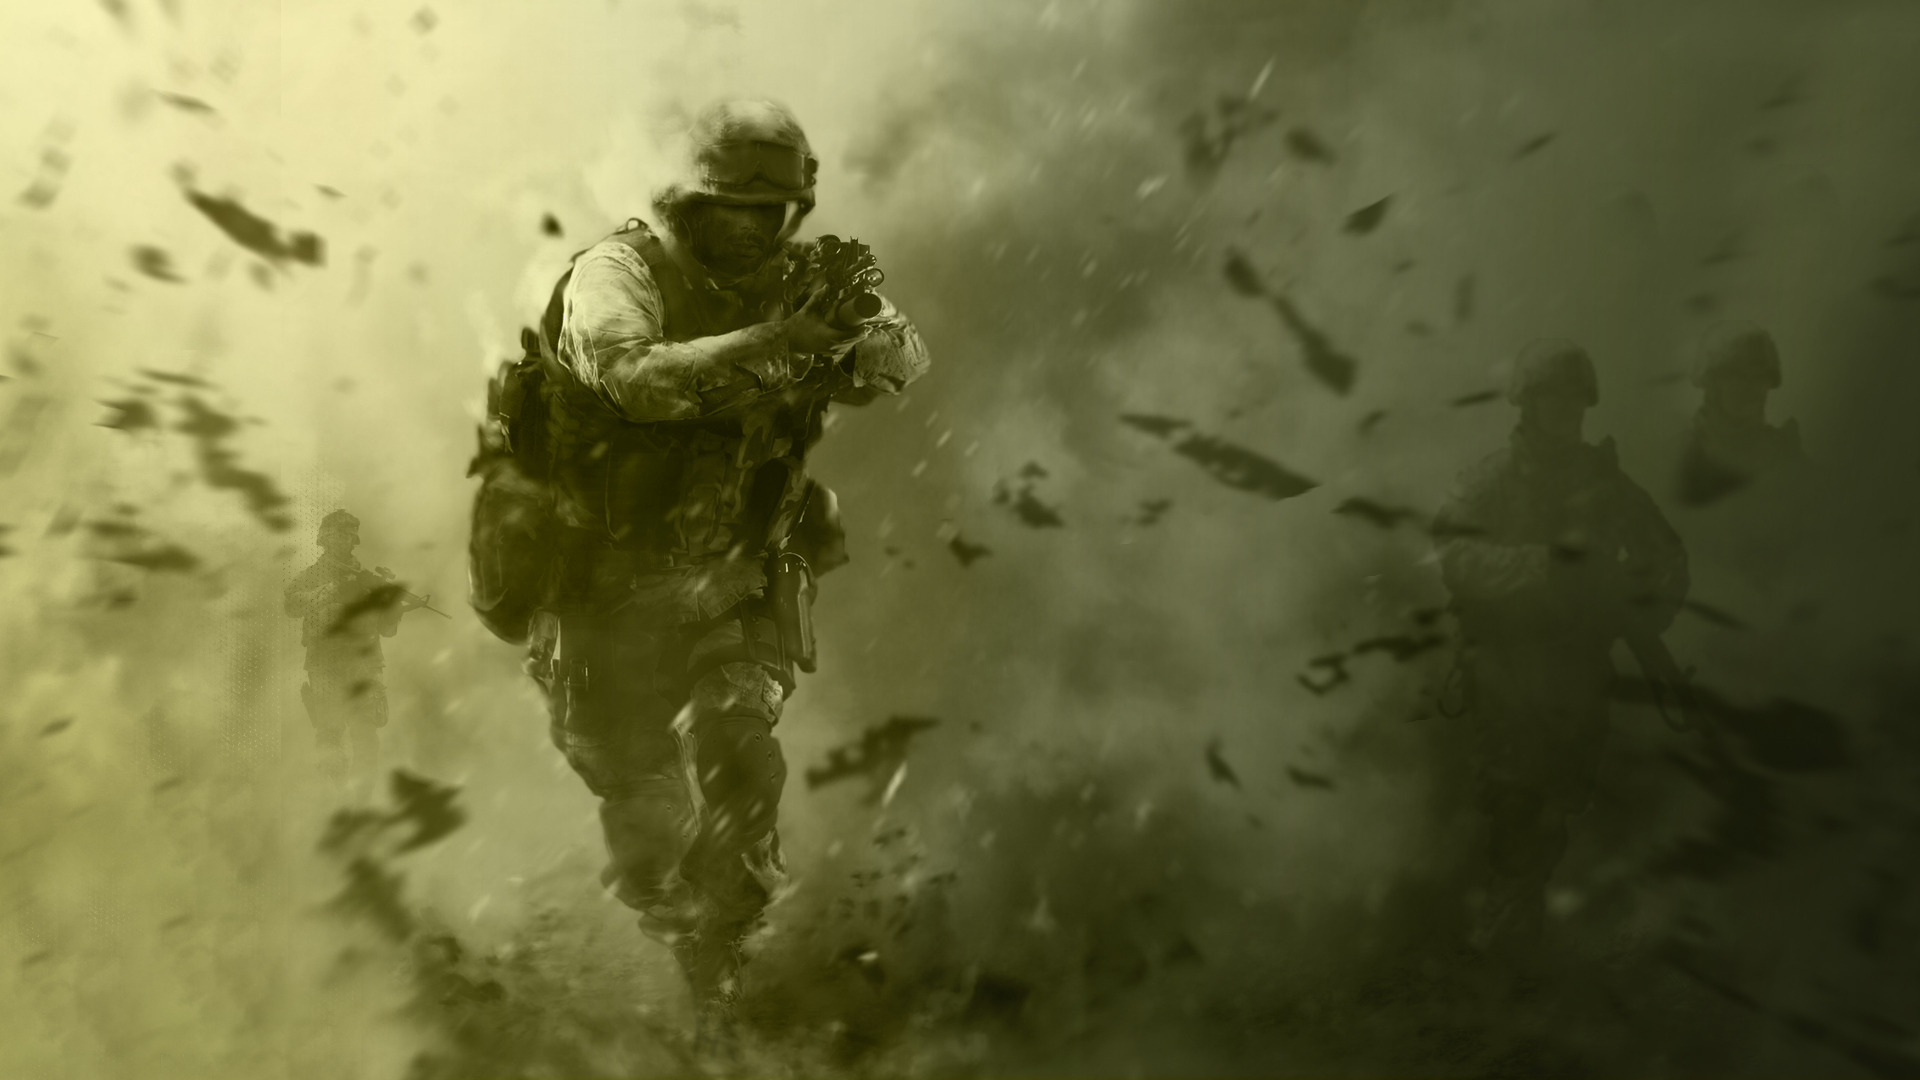 Call of Duty 4: Modern Warfare Wallpapers | Just Good Vibe